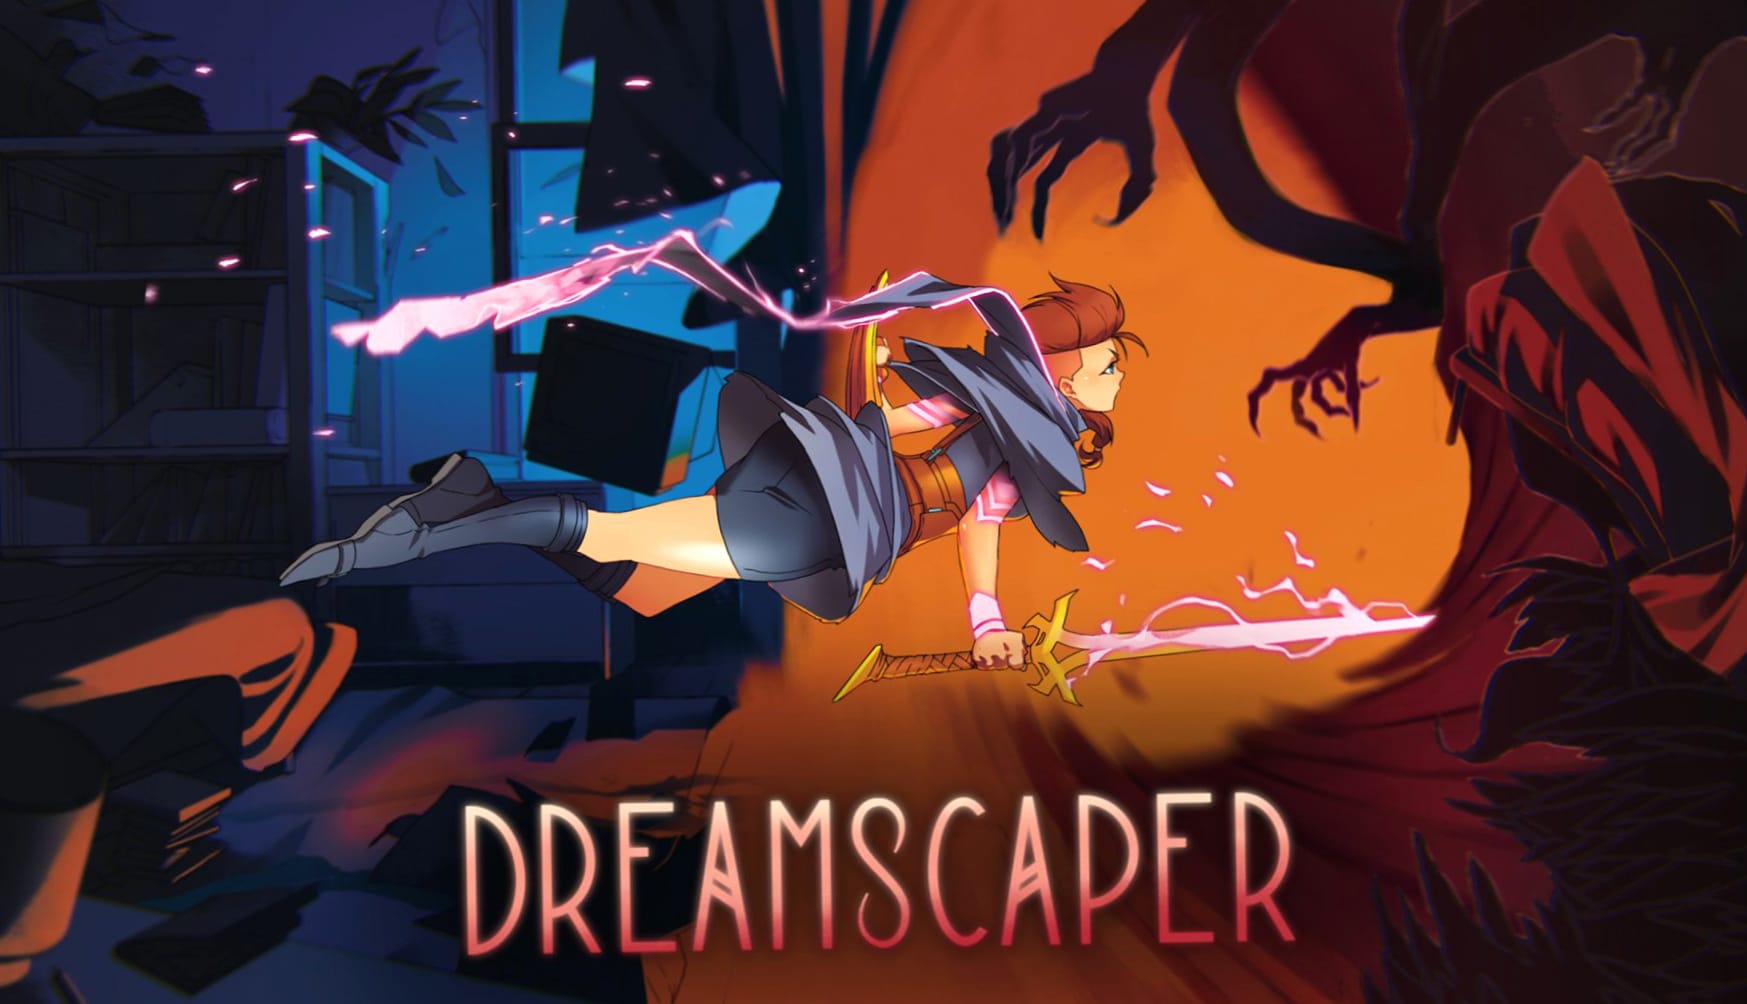 Dreamscaper at 2048 x 2048 iPad size wallpapers HD quality